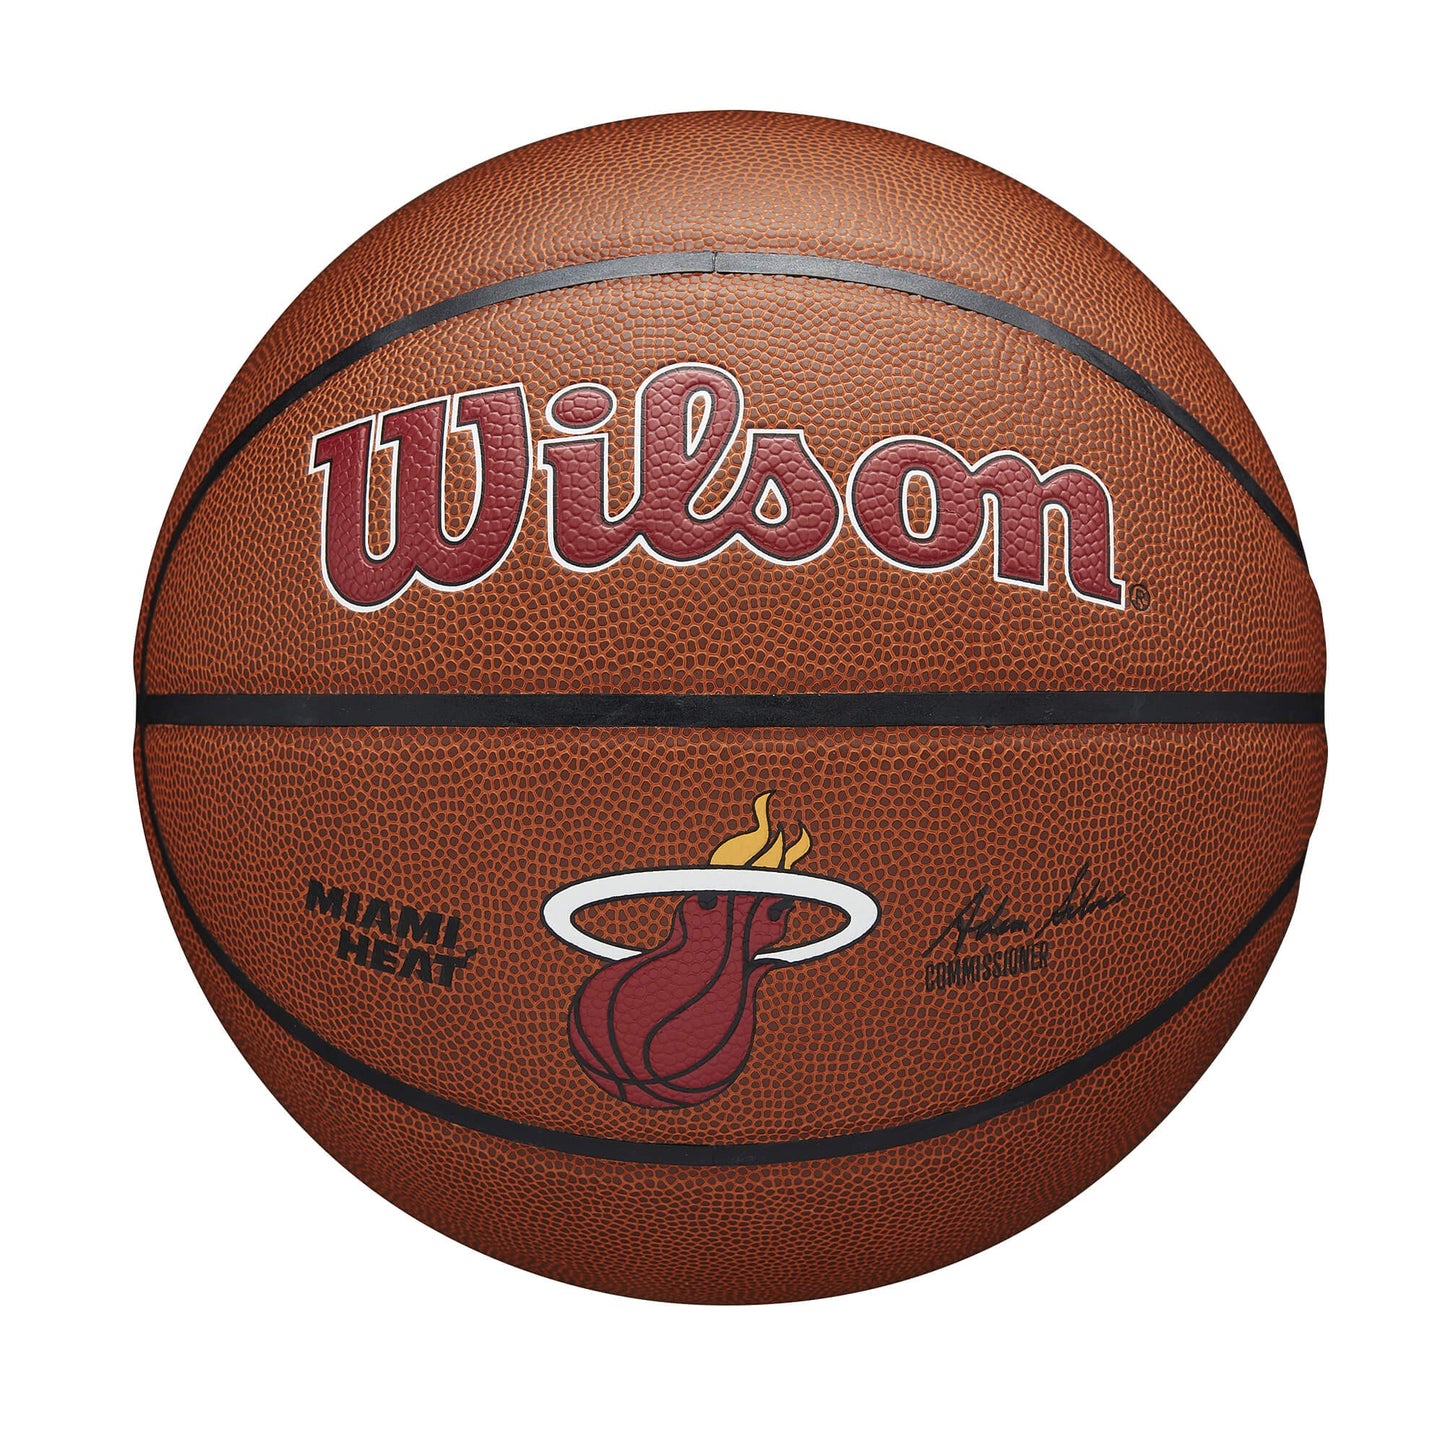 Wilson NBA Team Alliance Composite Basketball Miami Heat (sz. 7)